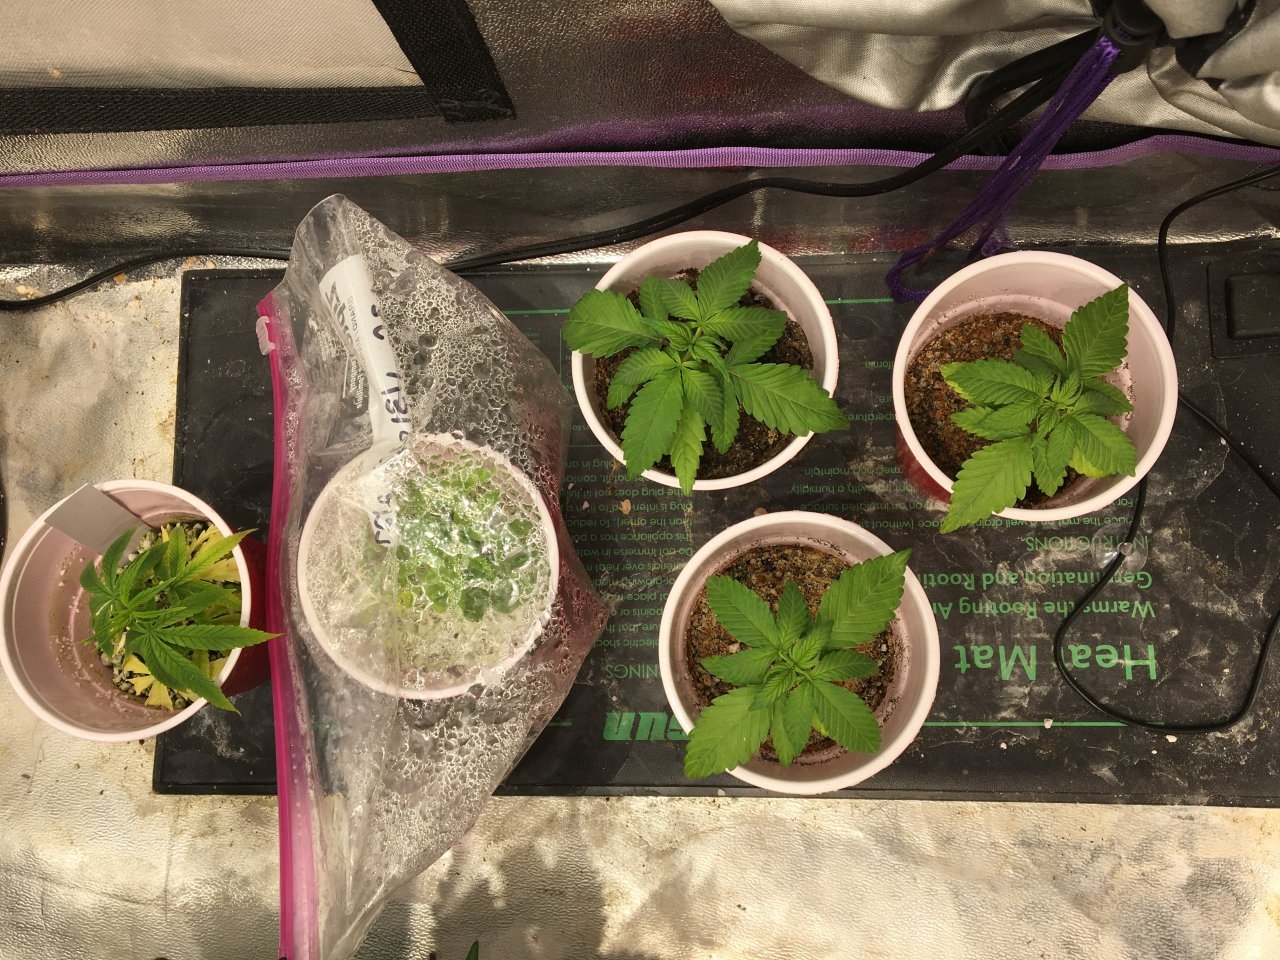 Cuttings and seedlings